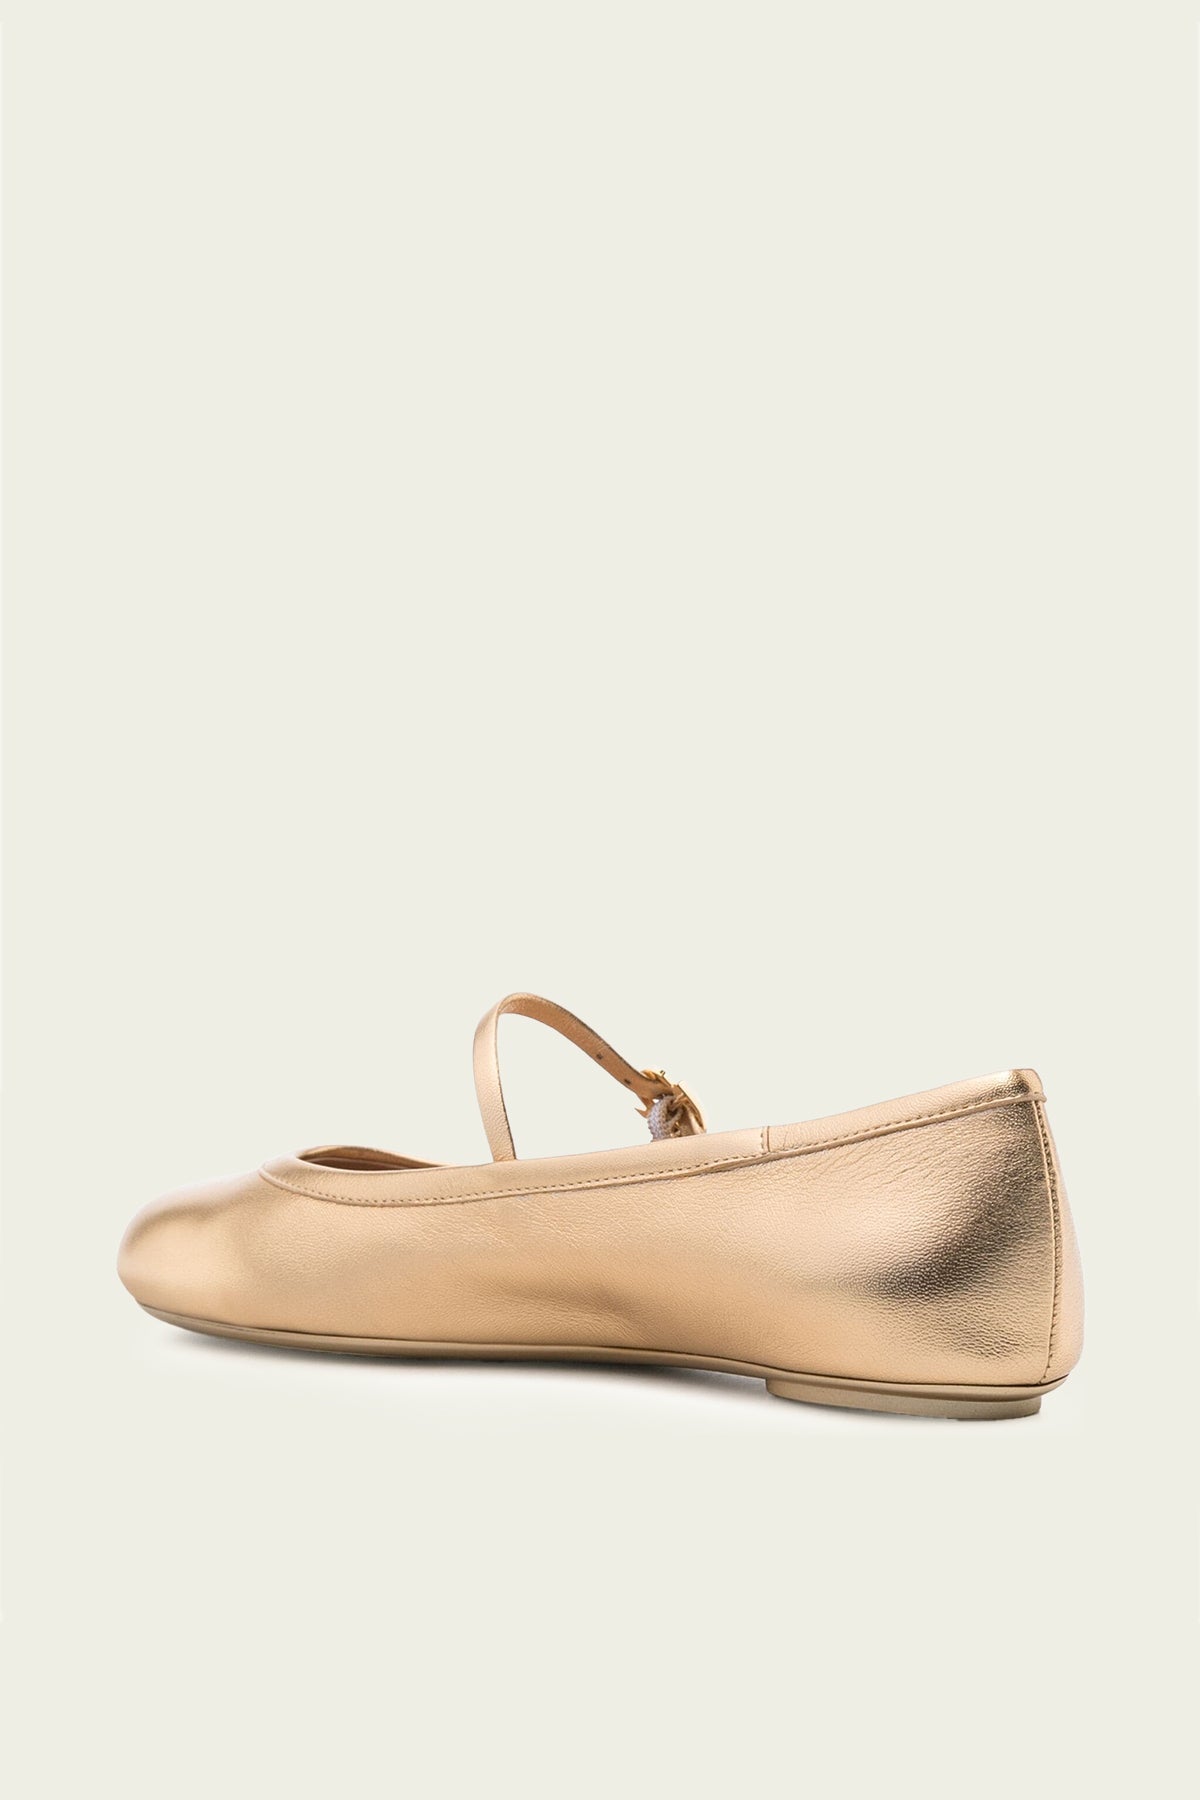 Carla Leather Ballerina Flats in Gold - shop-olivia.com